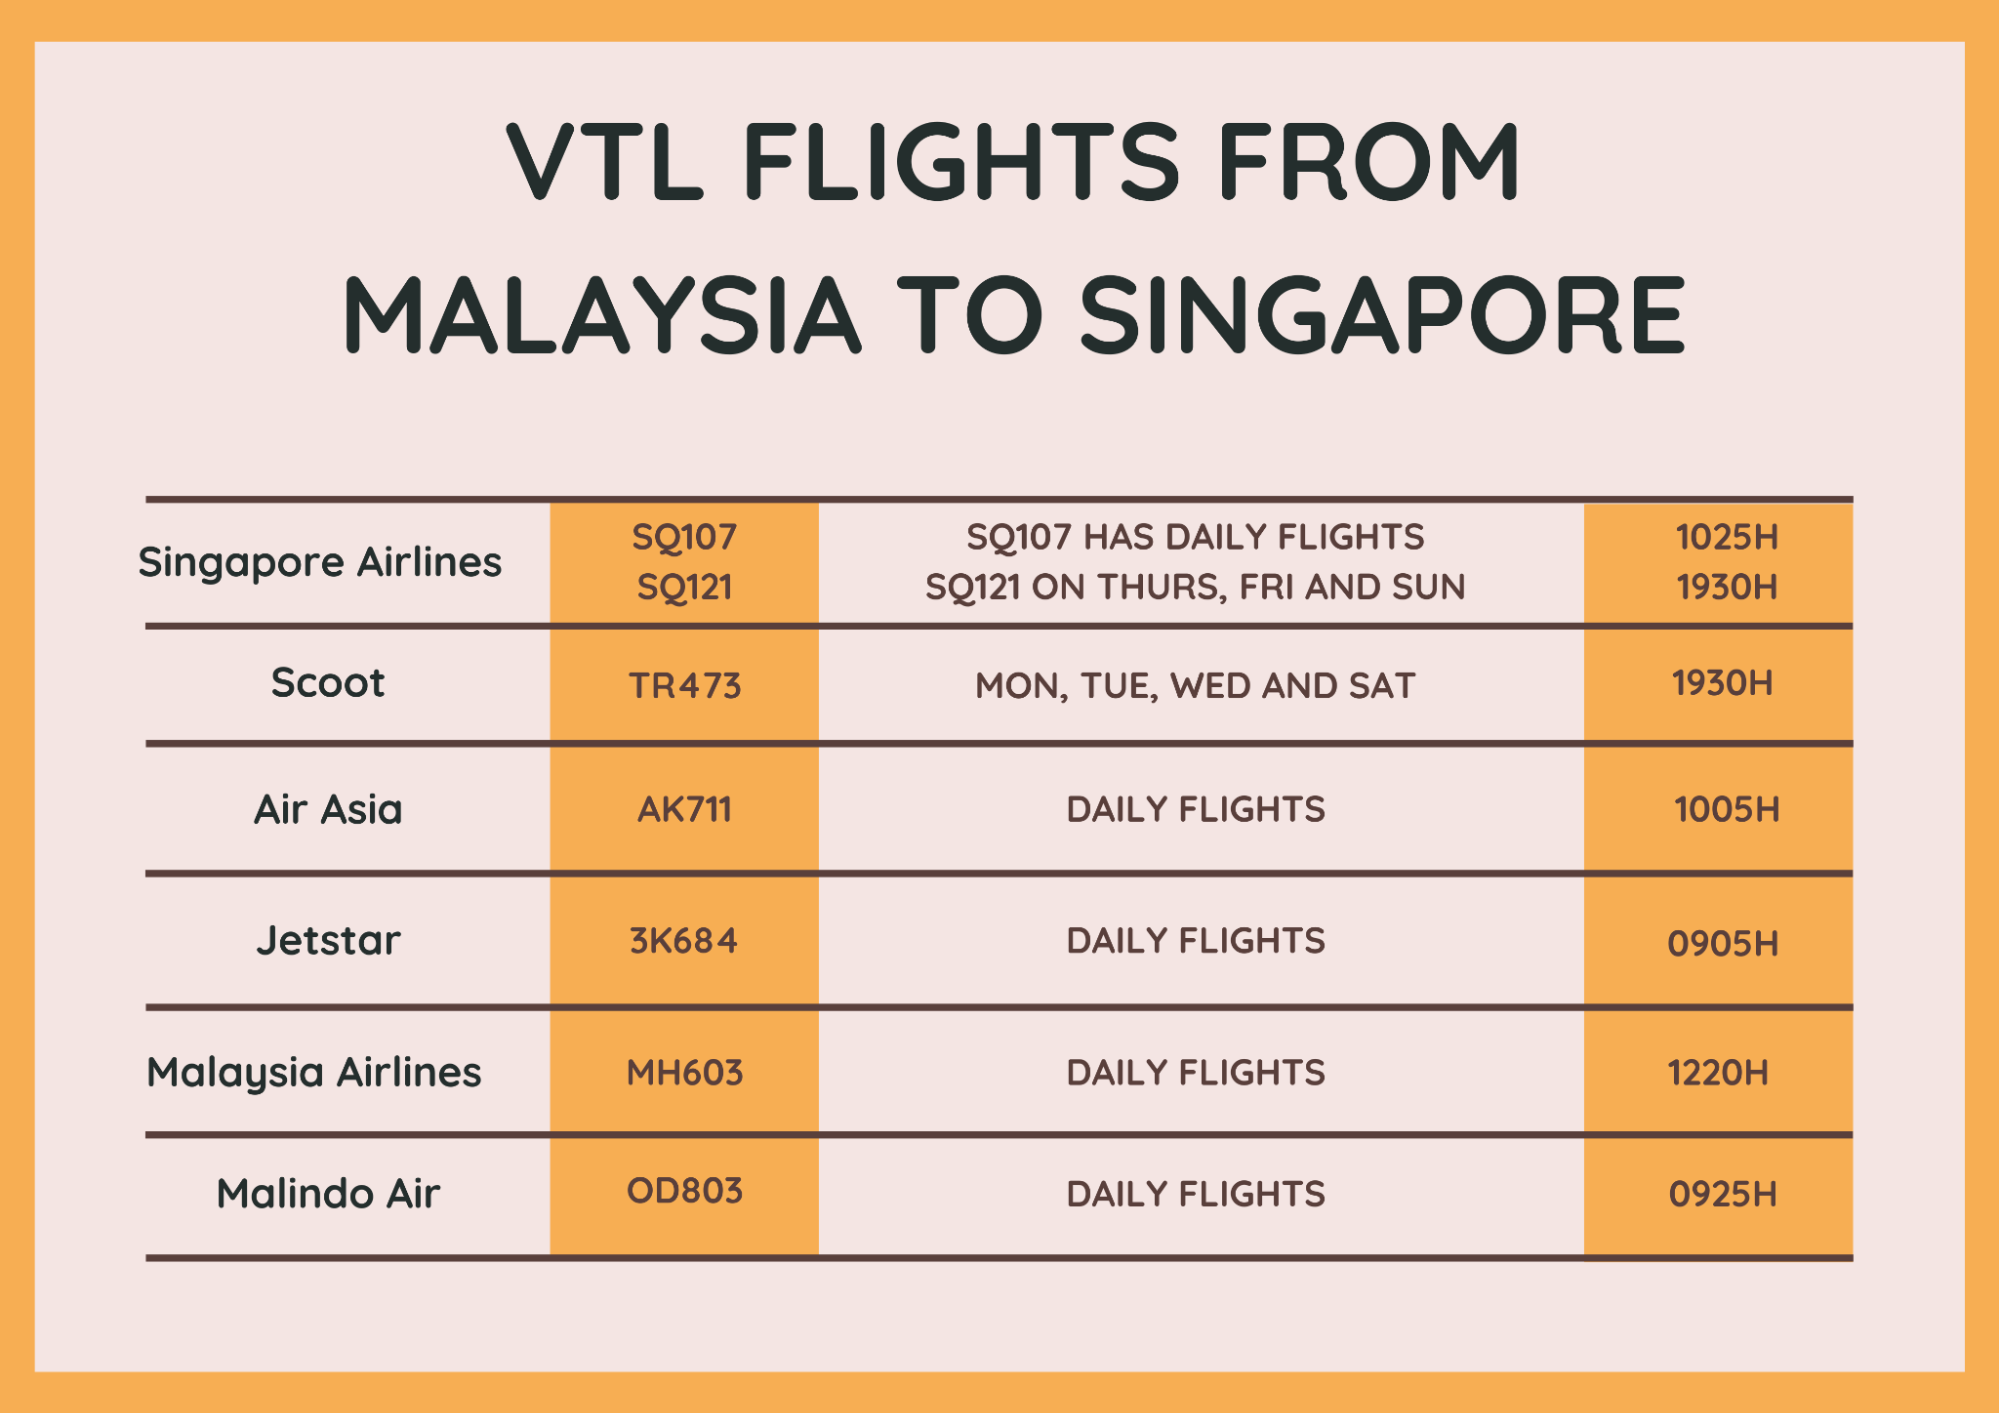 msia vtl - flight from malaysia